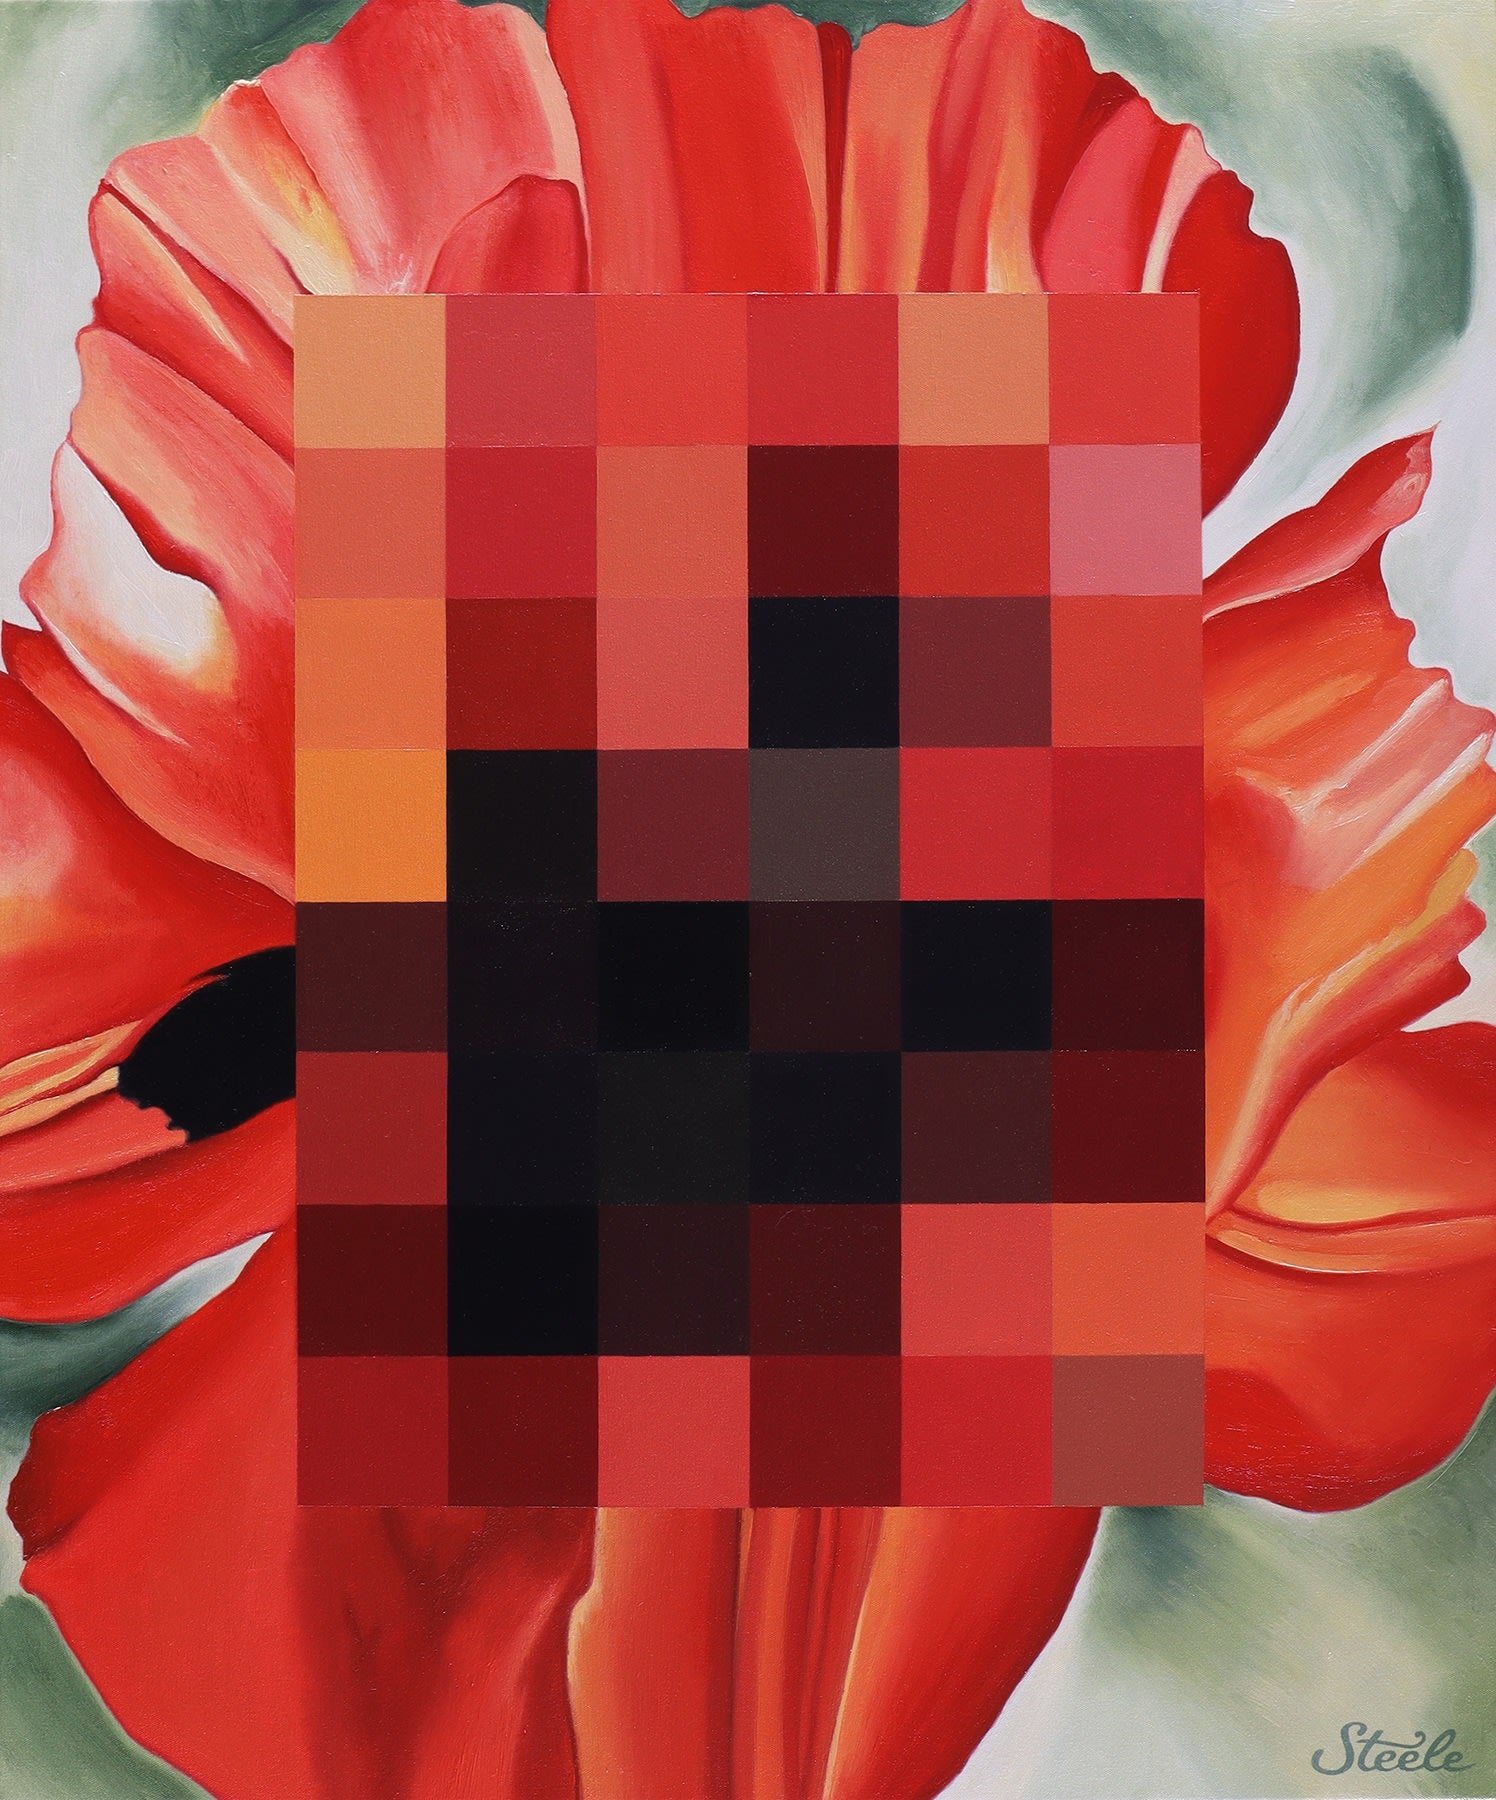 Censored: Red Poppy No. 6